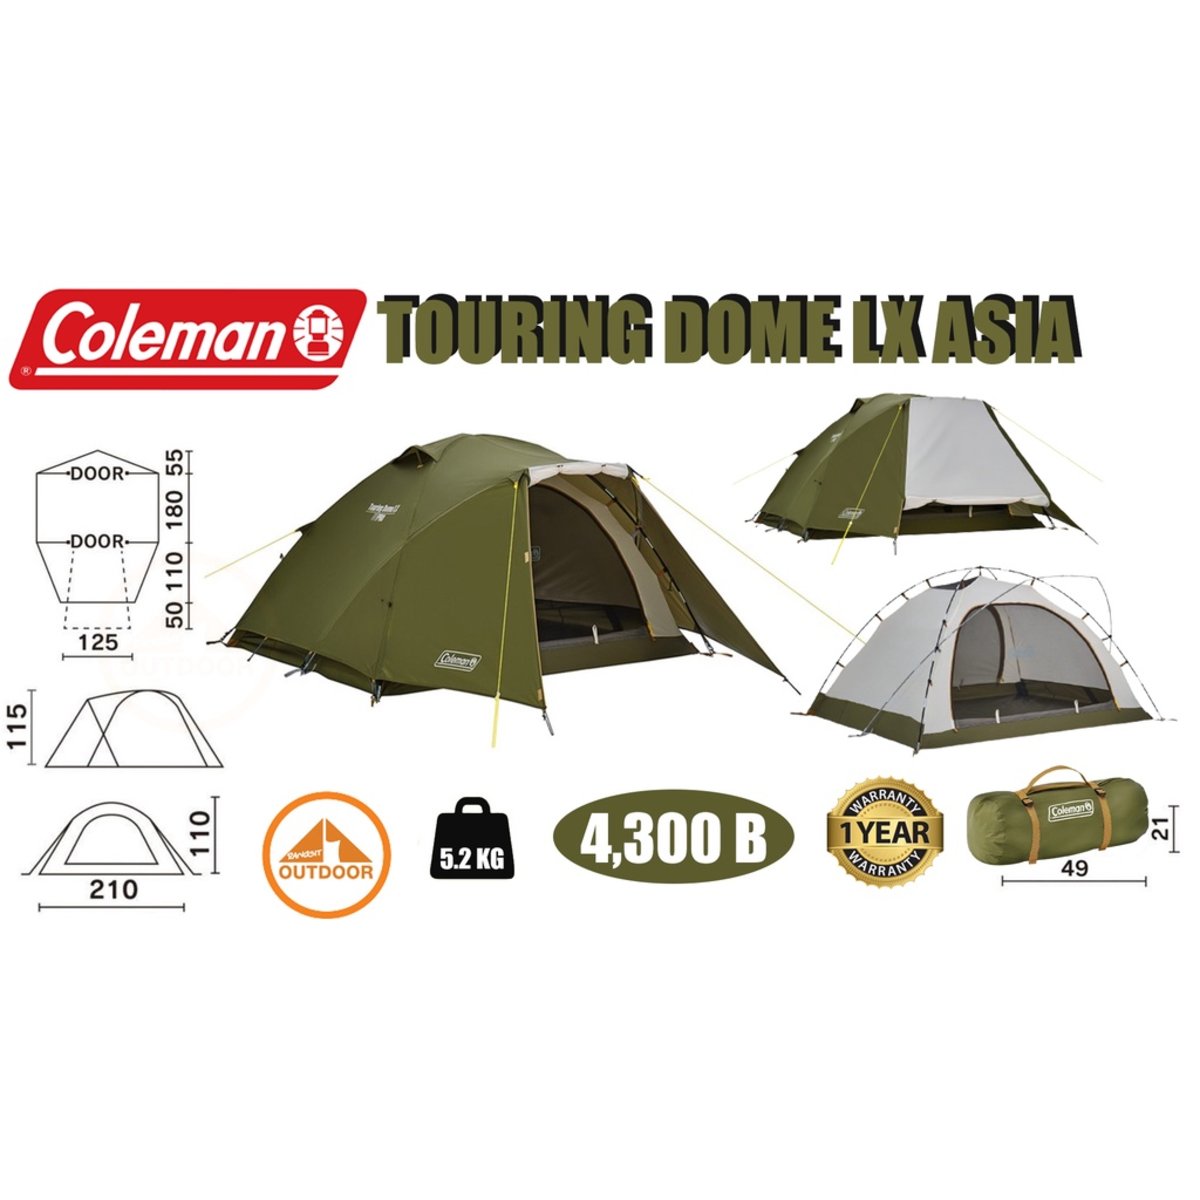 Coleman Touring Dome LX Asia เต๊นท์ขนาด 2-3 คน 5.2 Kg - NocNoc